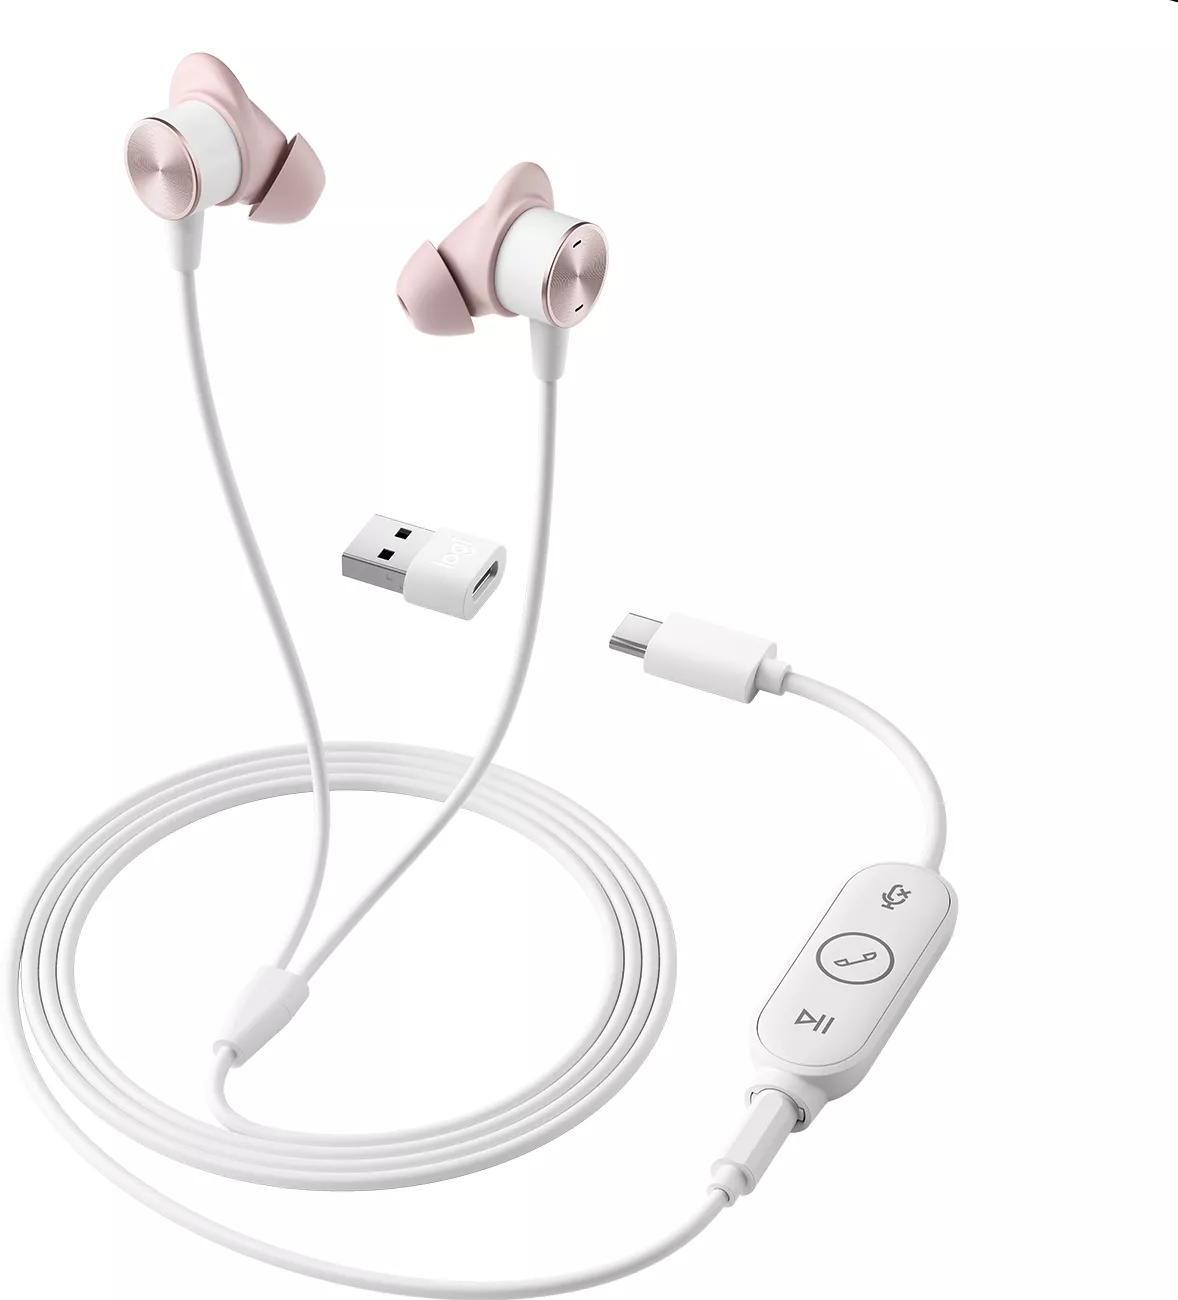 Revendeur officiel LOGITECH Zone Wired Earbuds Headset in-ear wired 3.5 mm